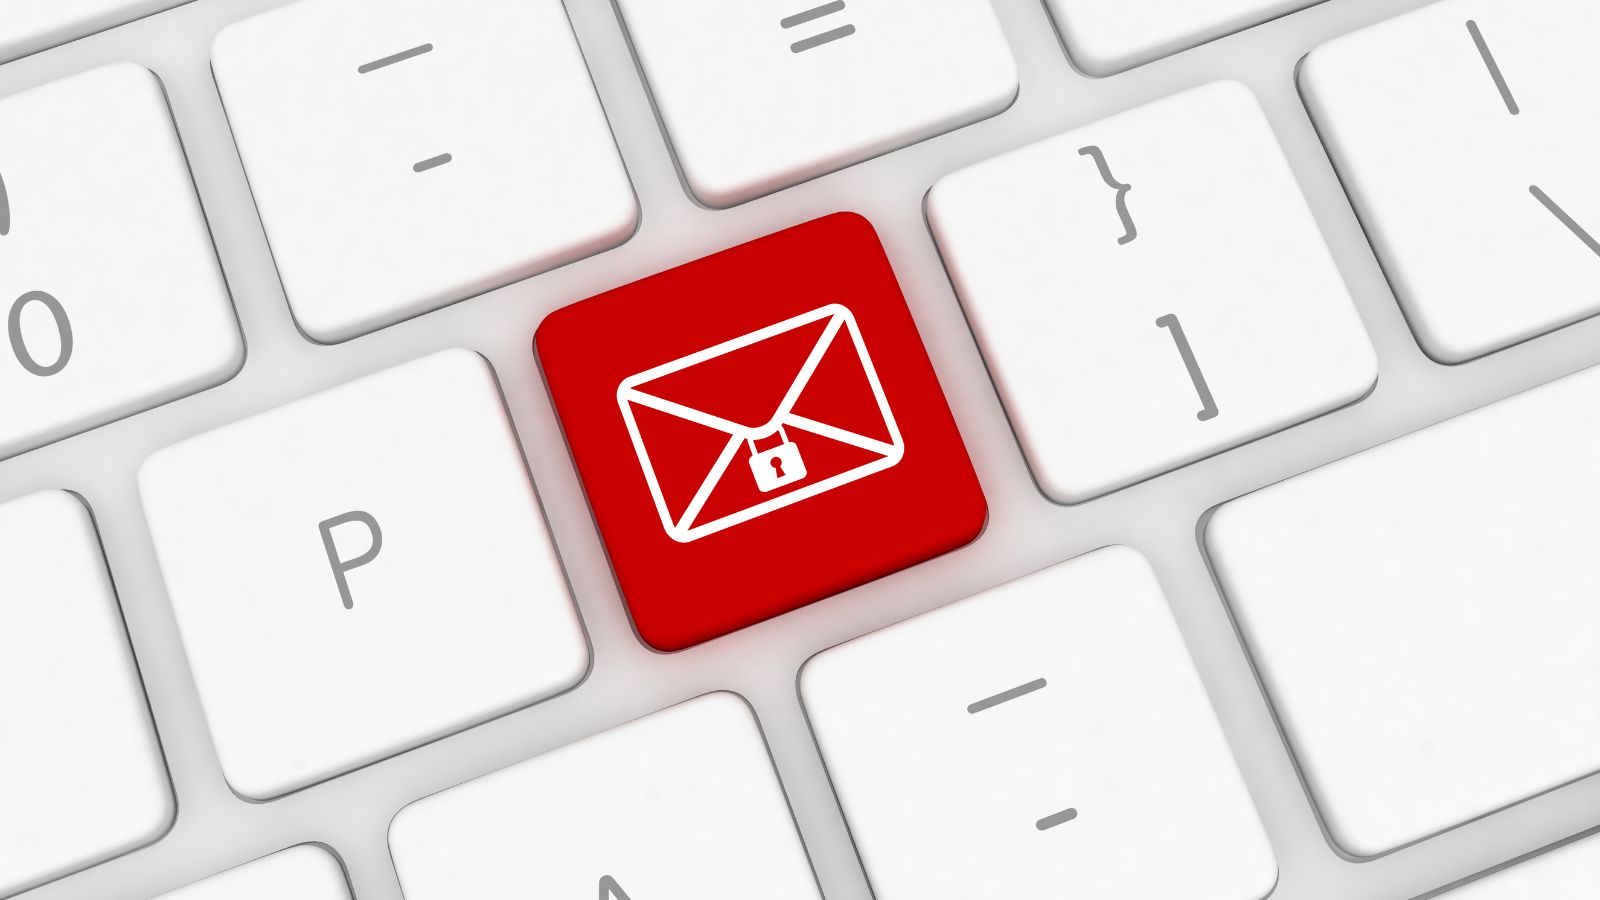 4 ways to send sensitive information via email